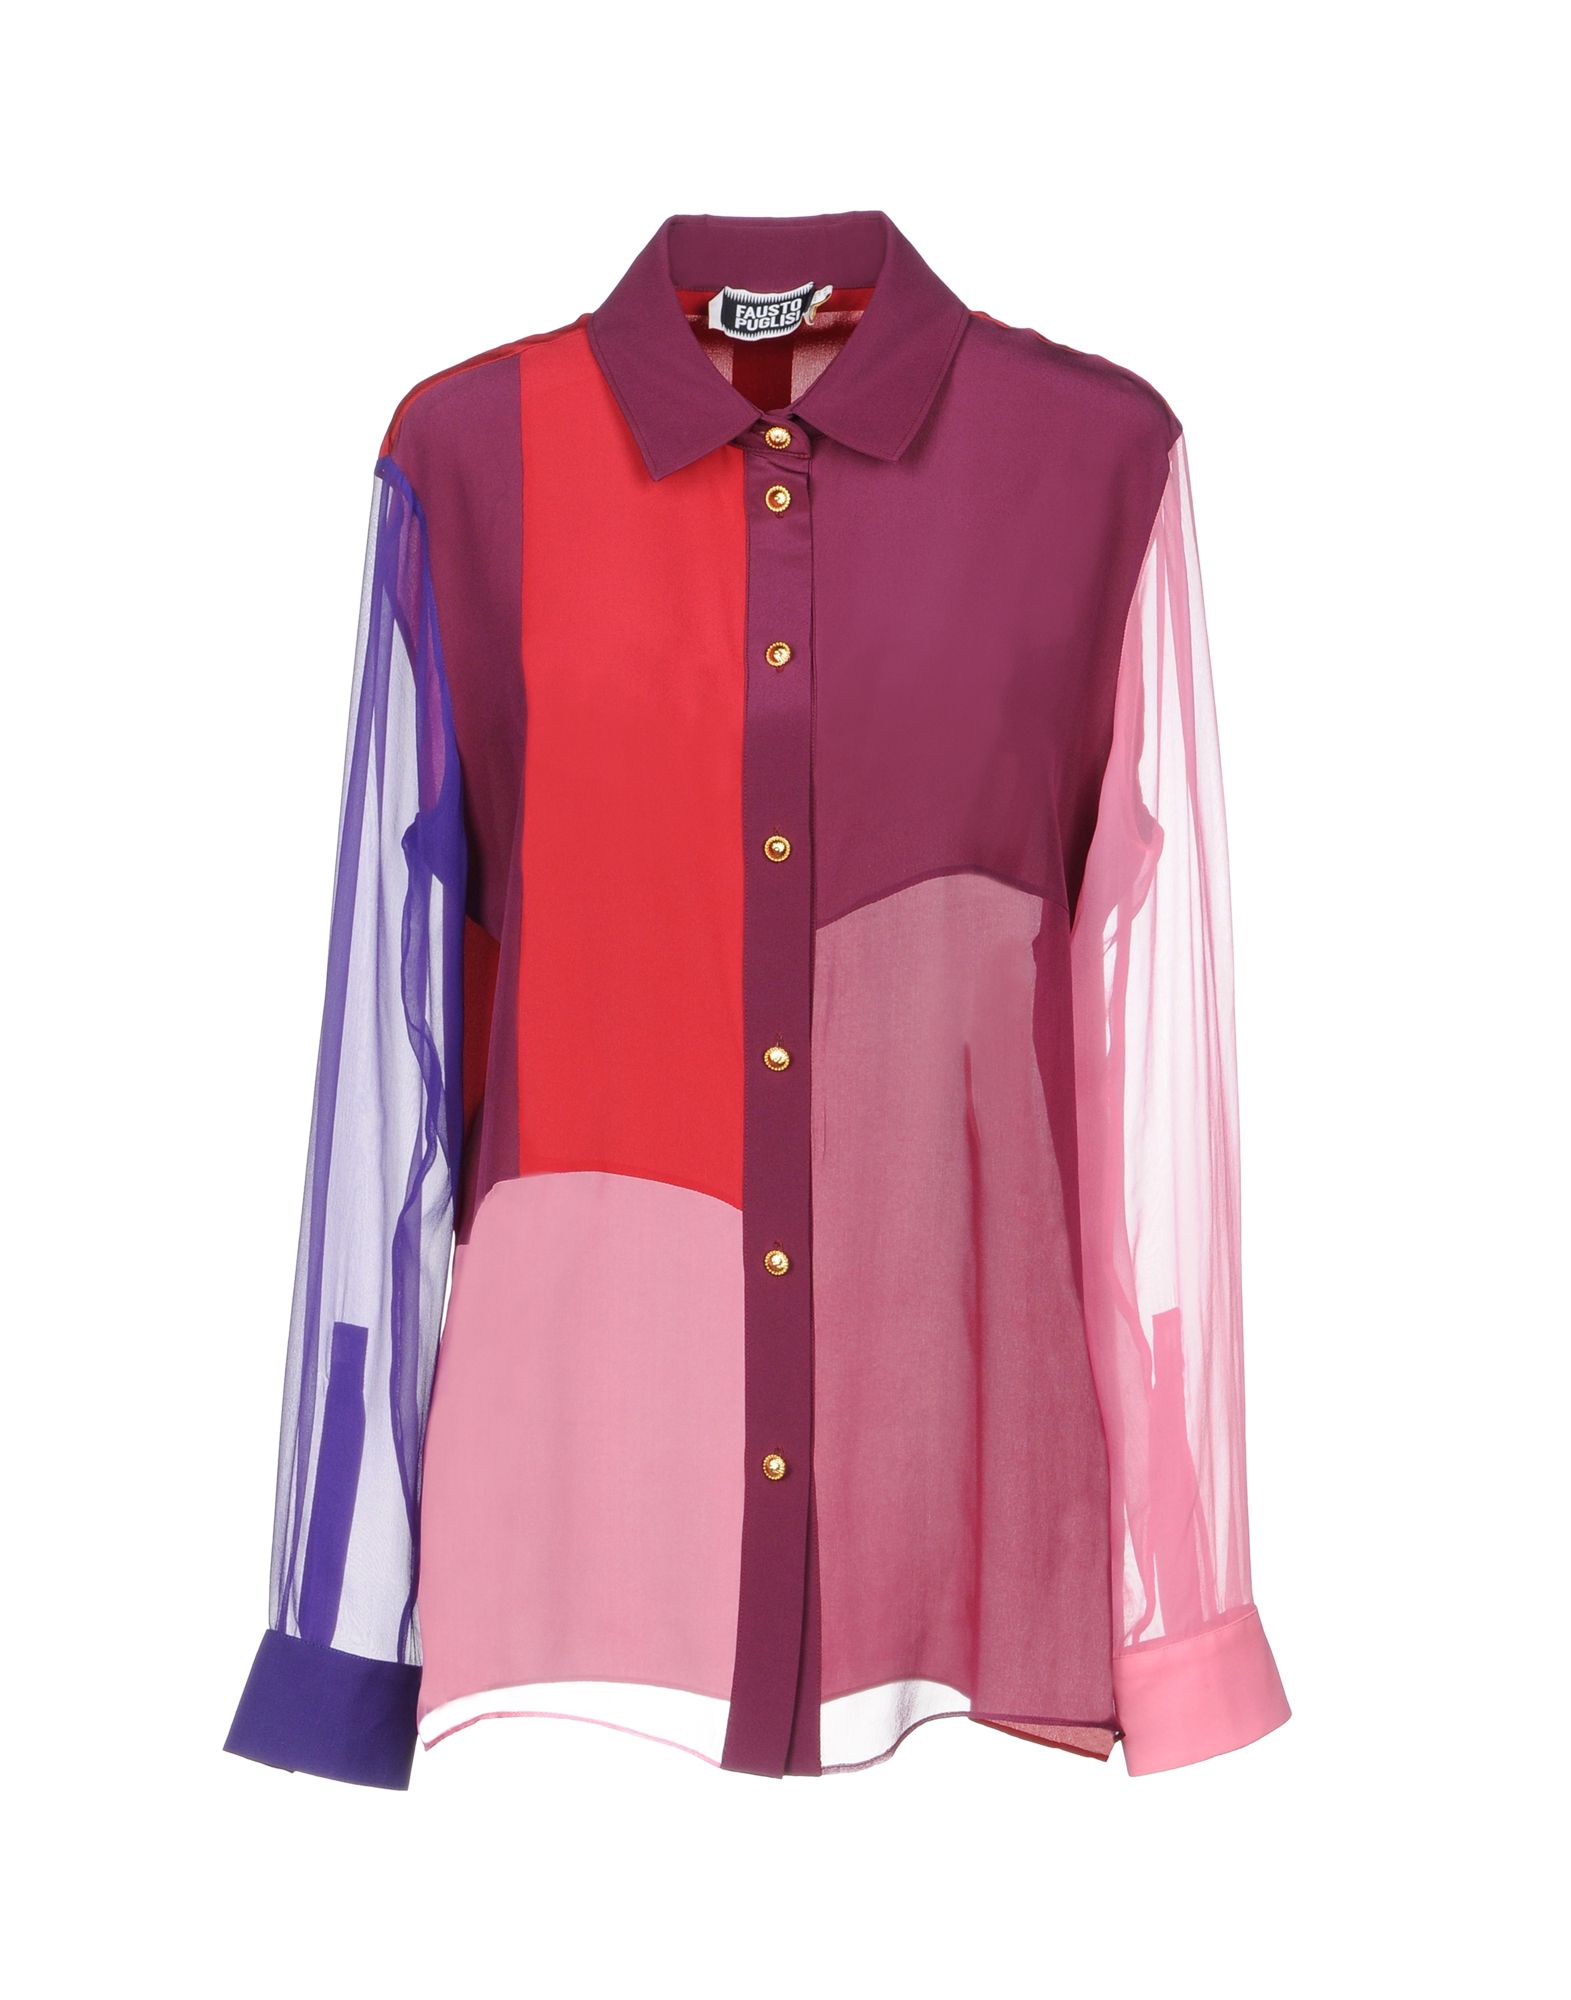 FAUSTO PUGLISI Patterned shirts & blouses,38746649JG 5